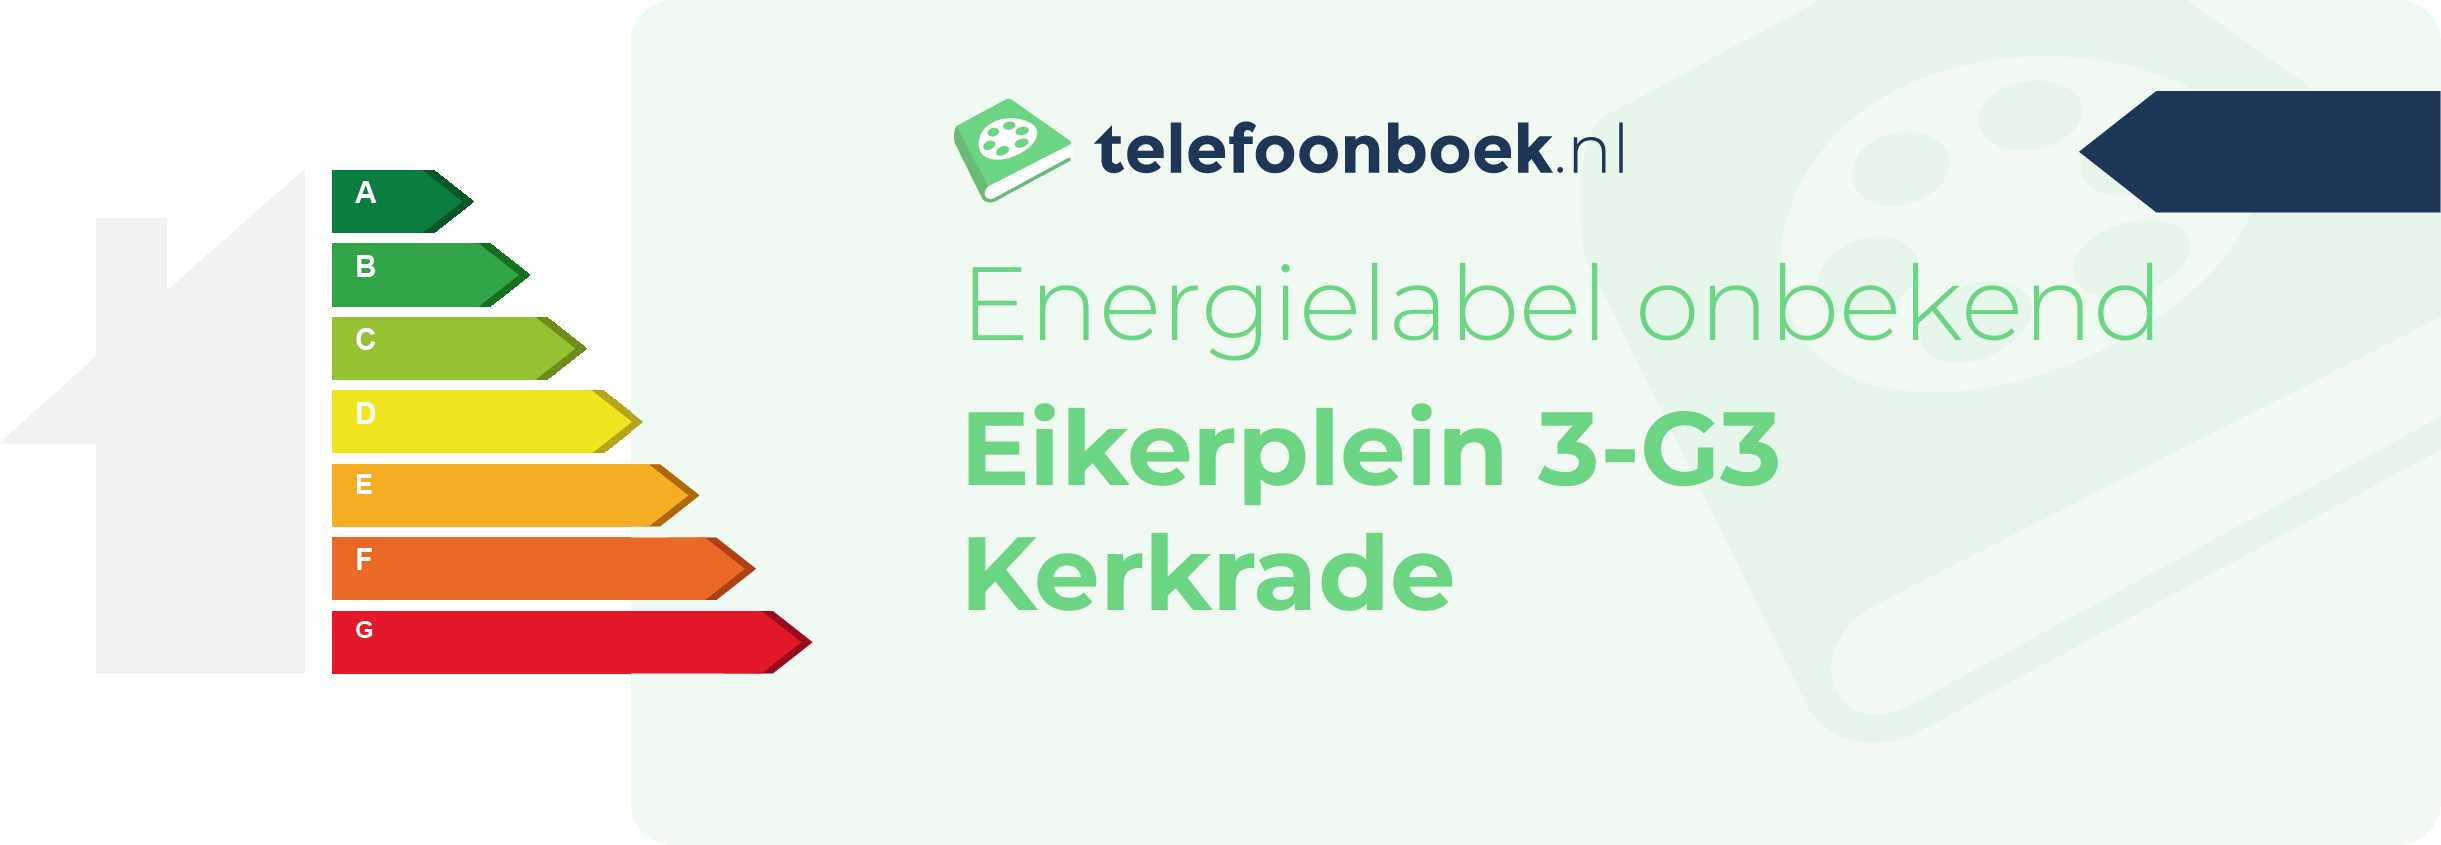 Energielabel Eikerplein 3-G3 Kerkrade